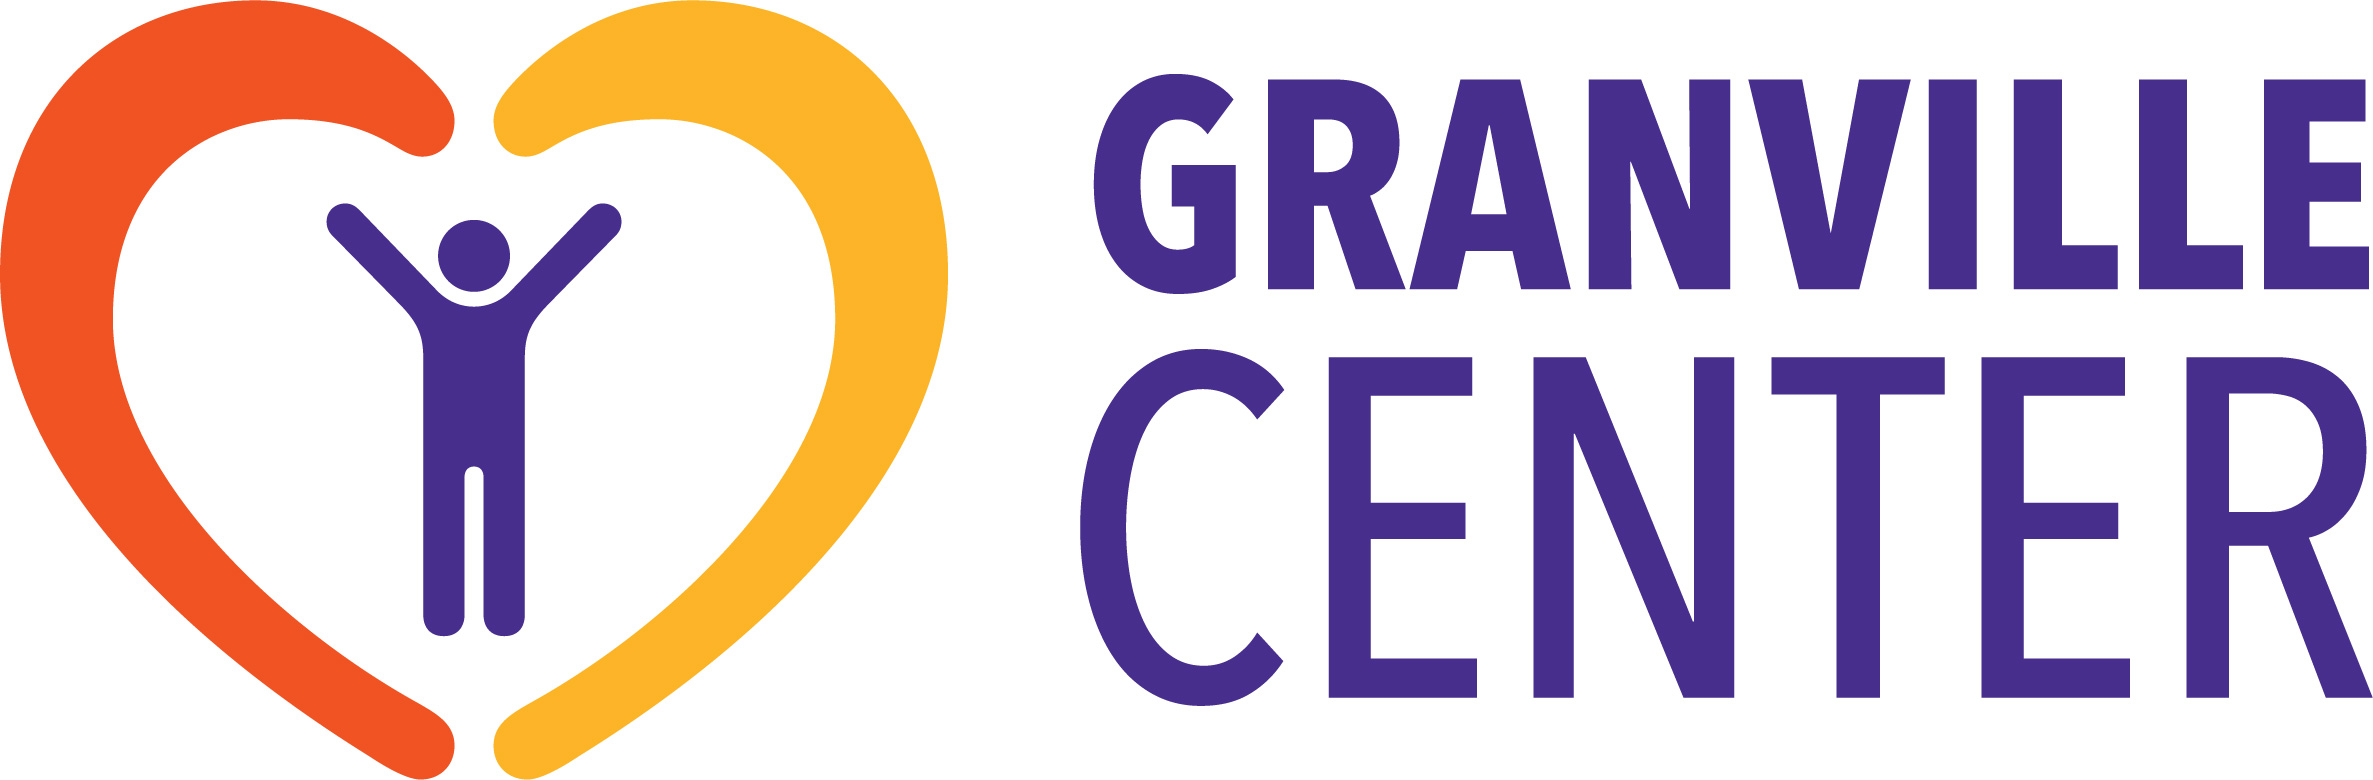 Granville Center logo